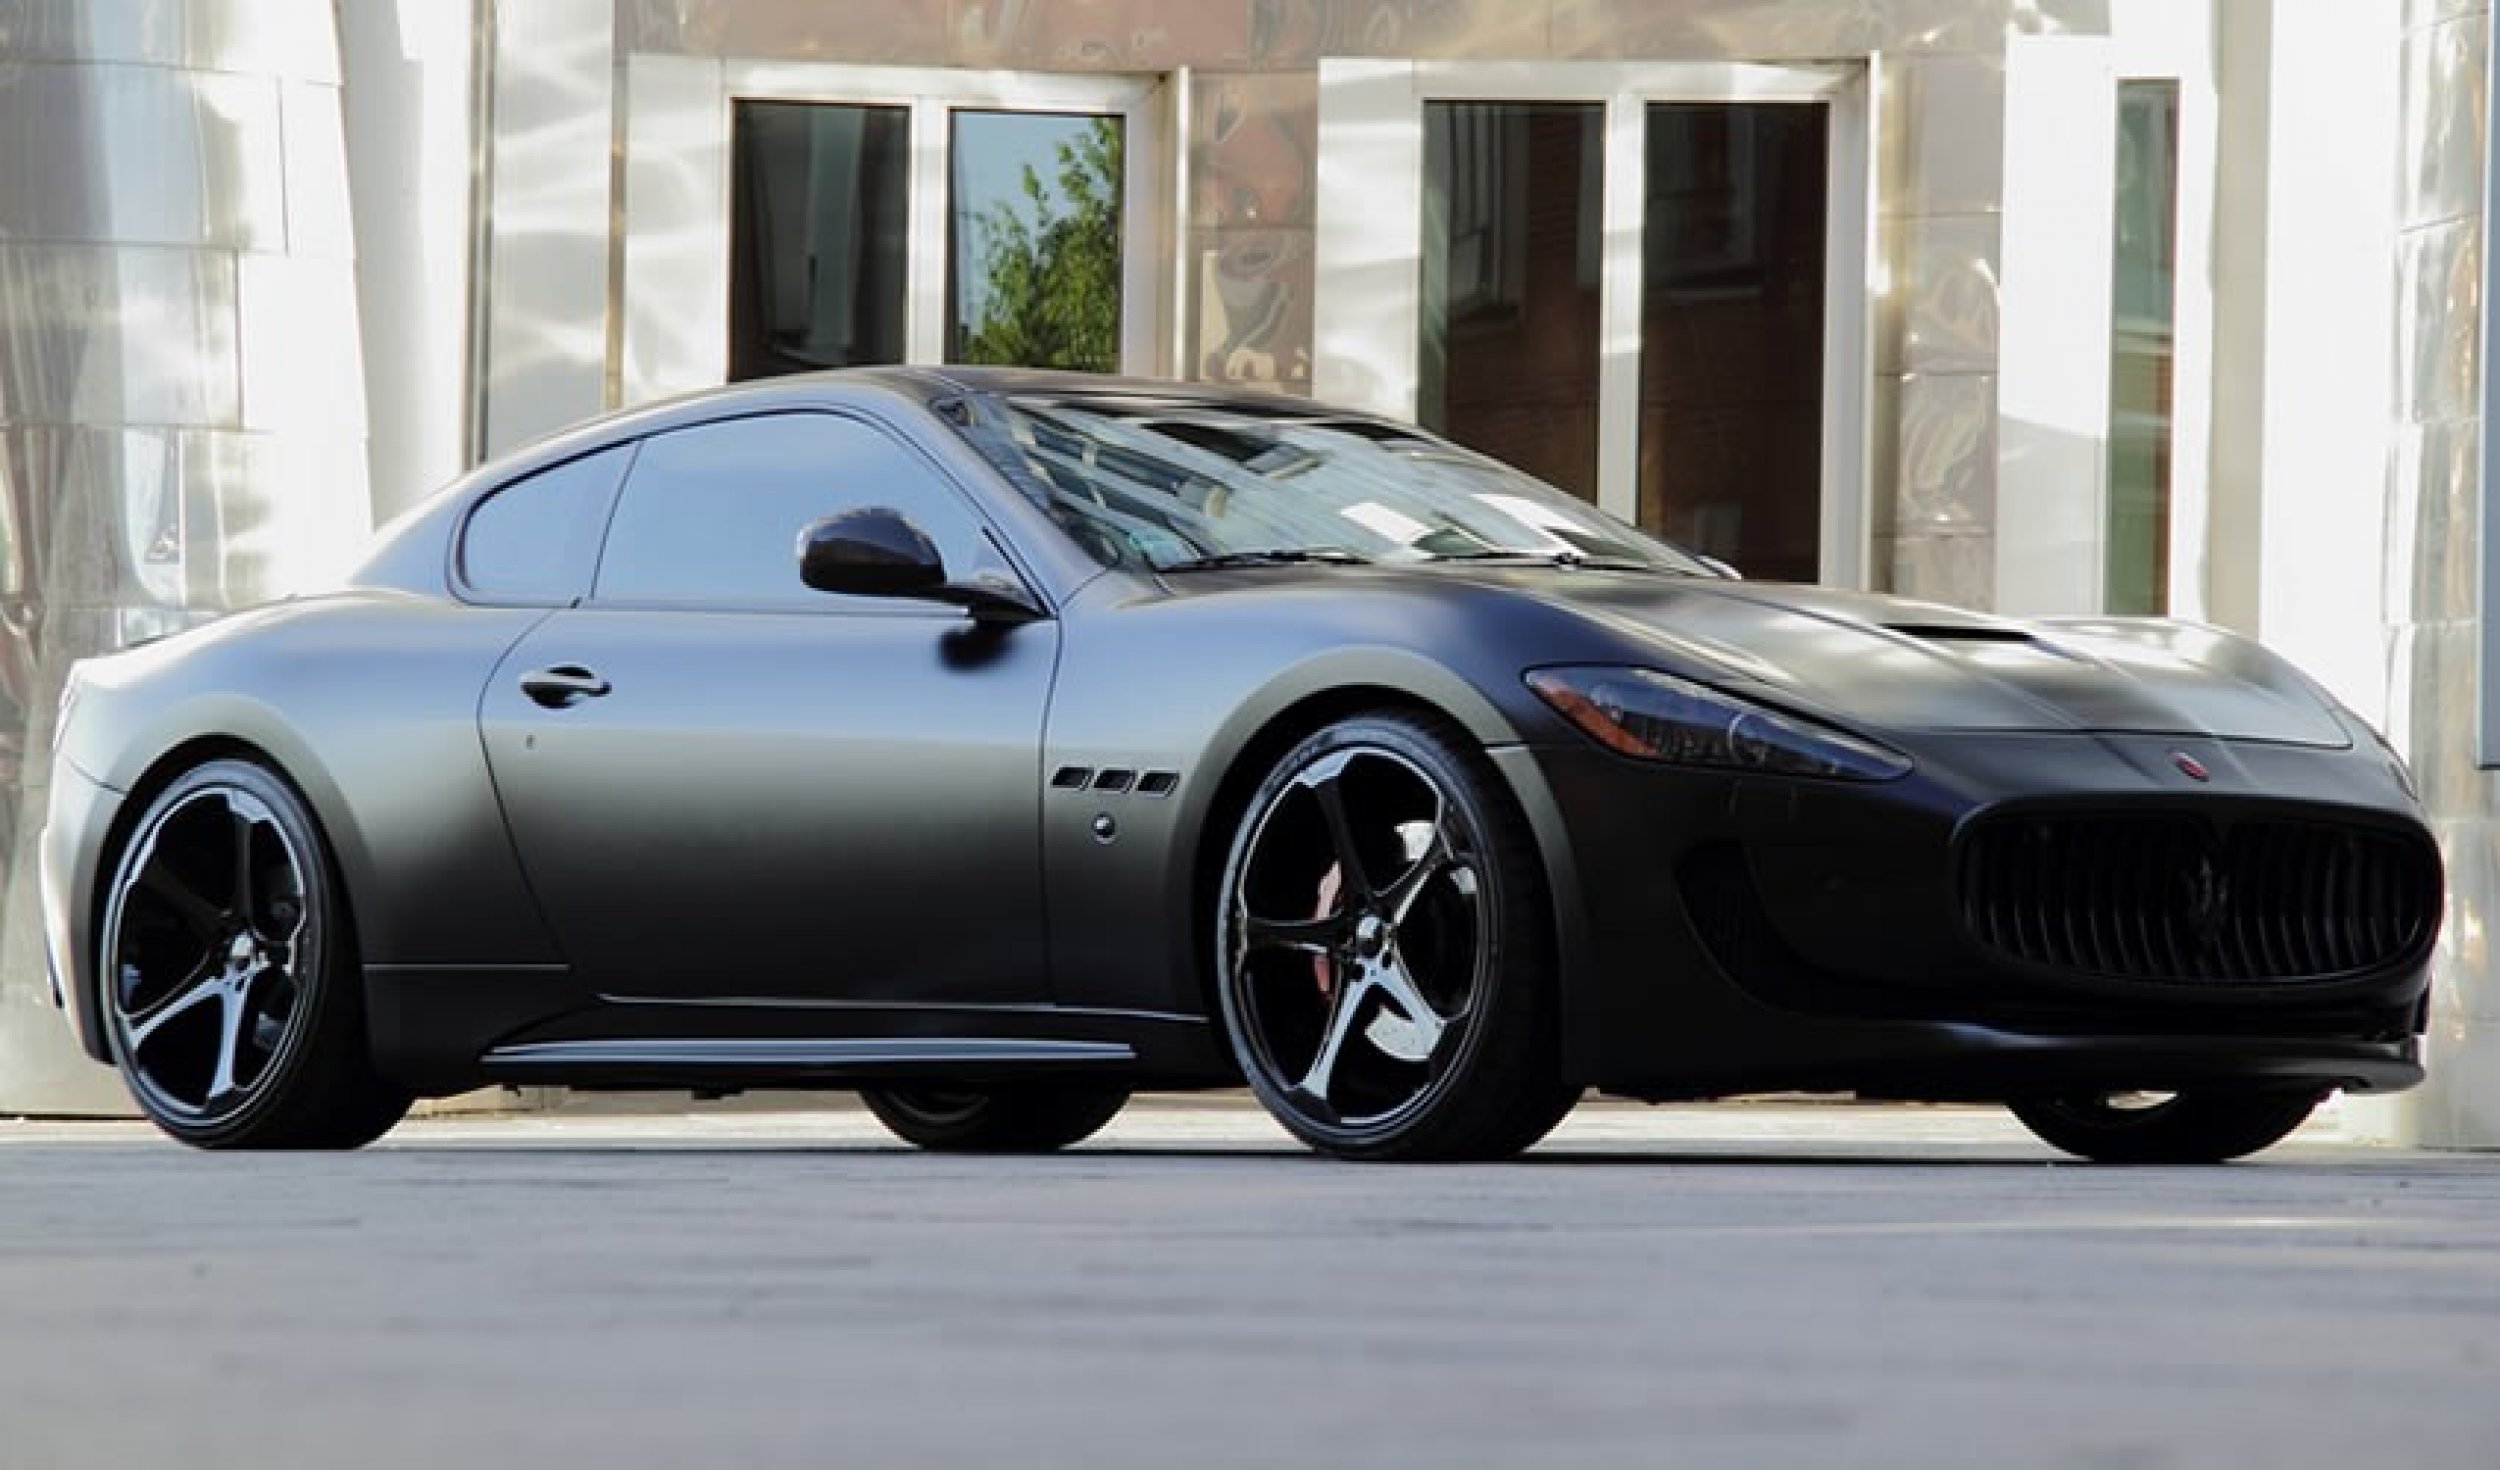 Anderson Germany Glams-up Maserati Gran Turismo S into a Menacing Black Version.